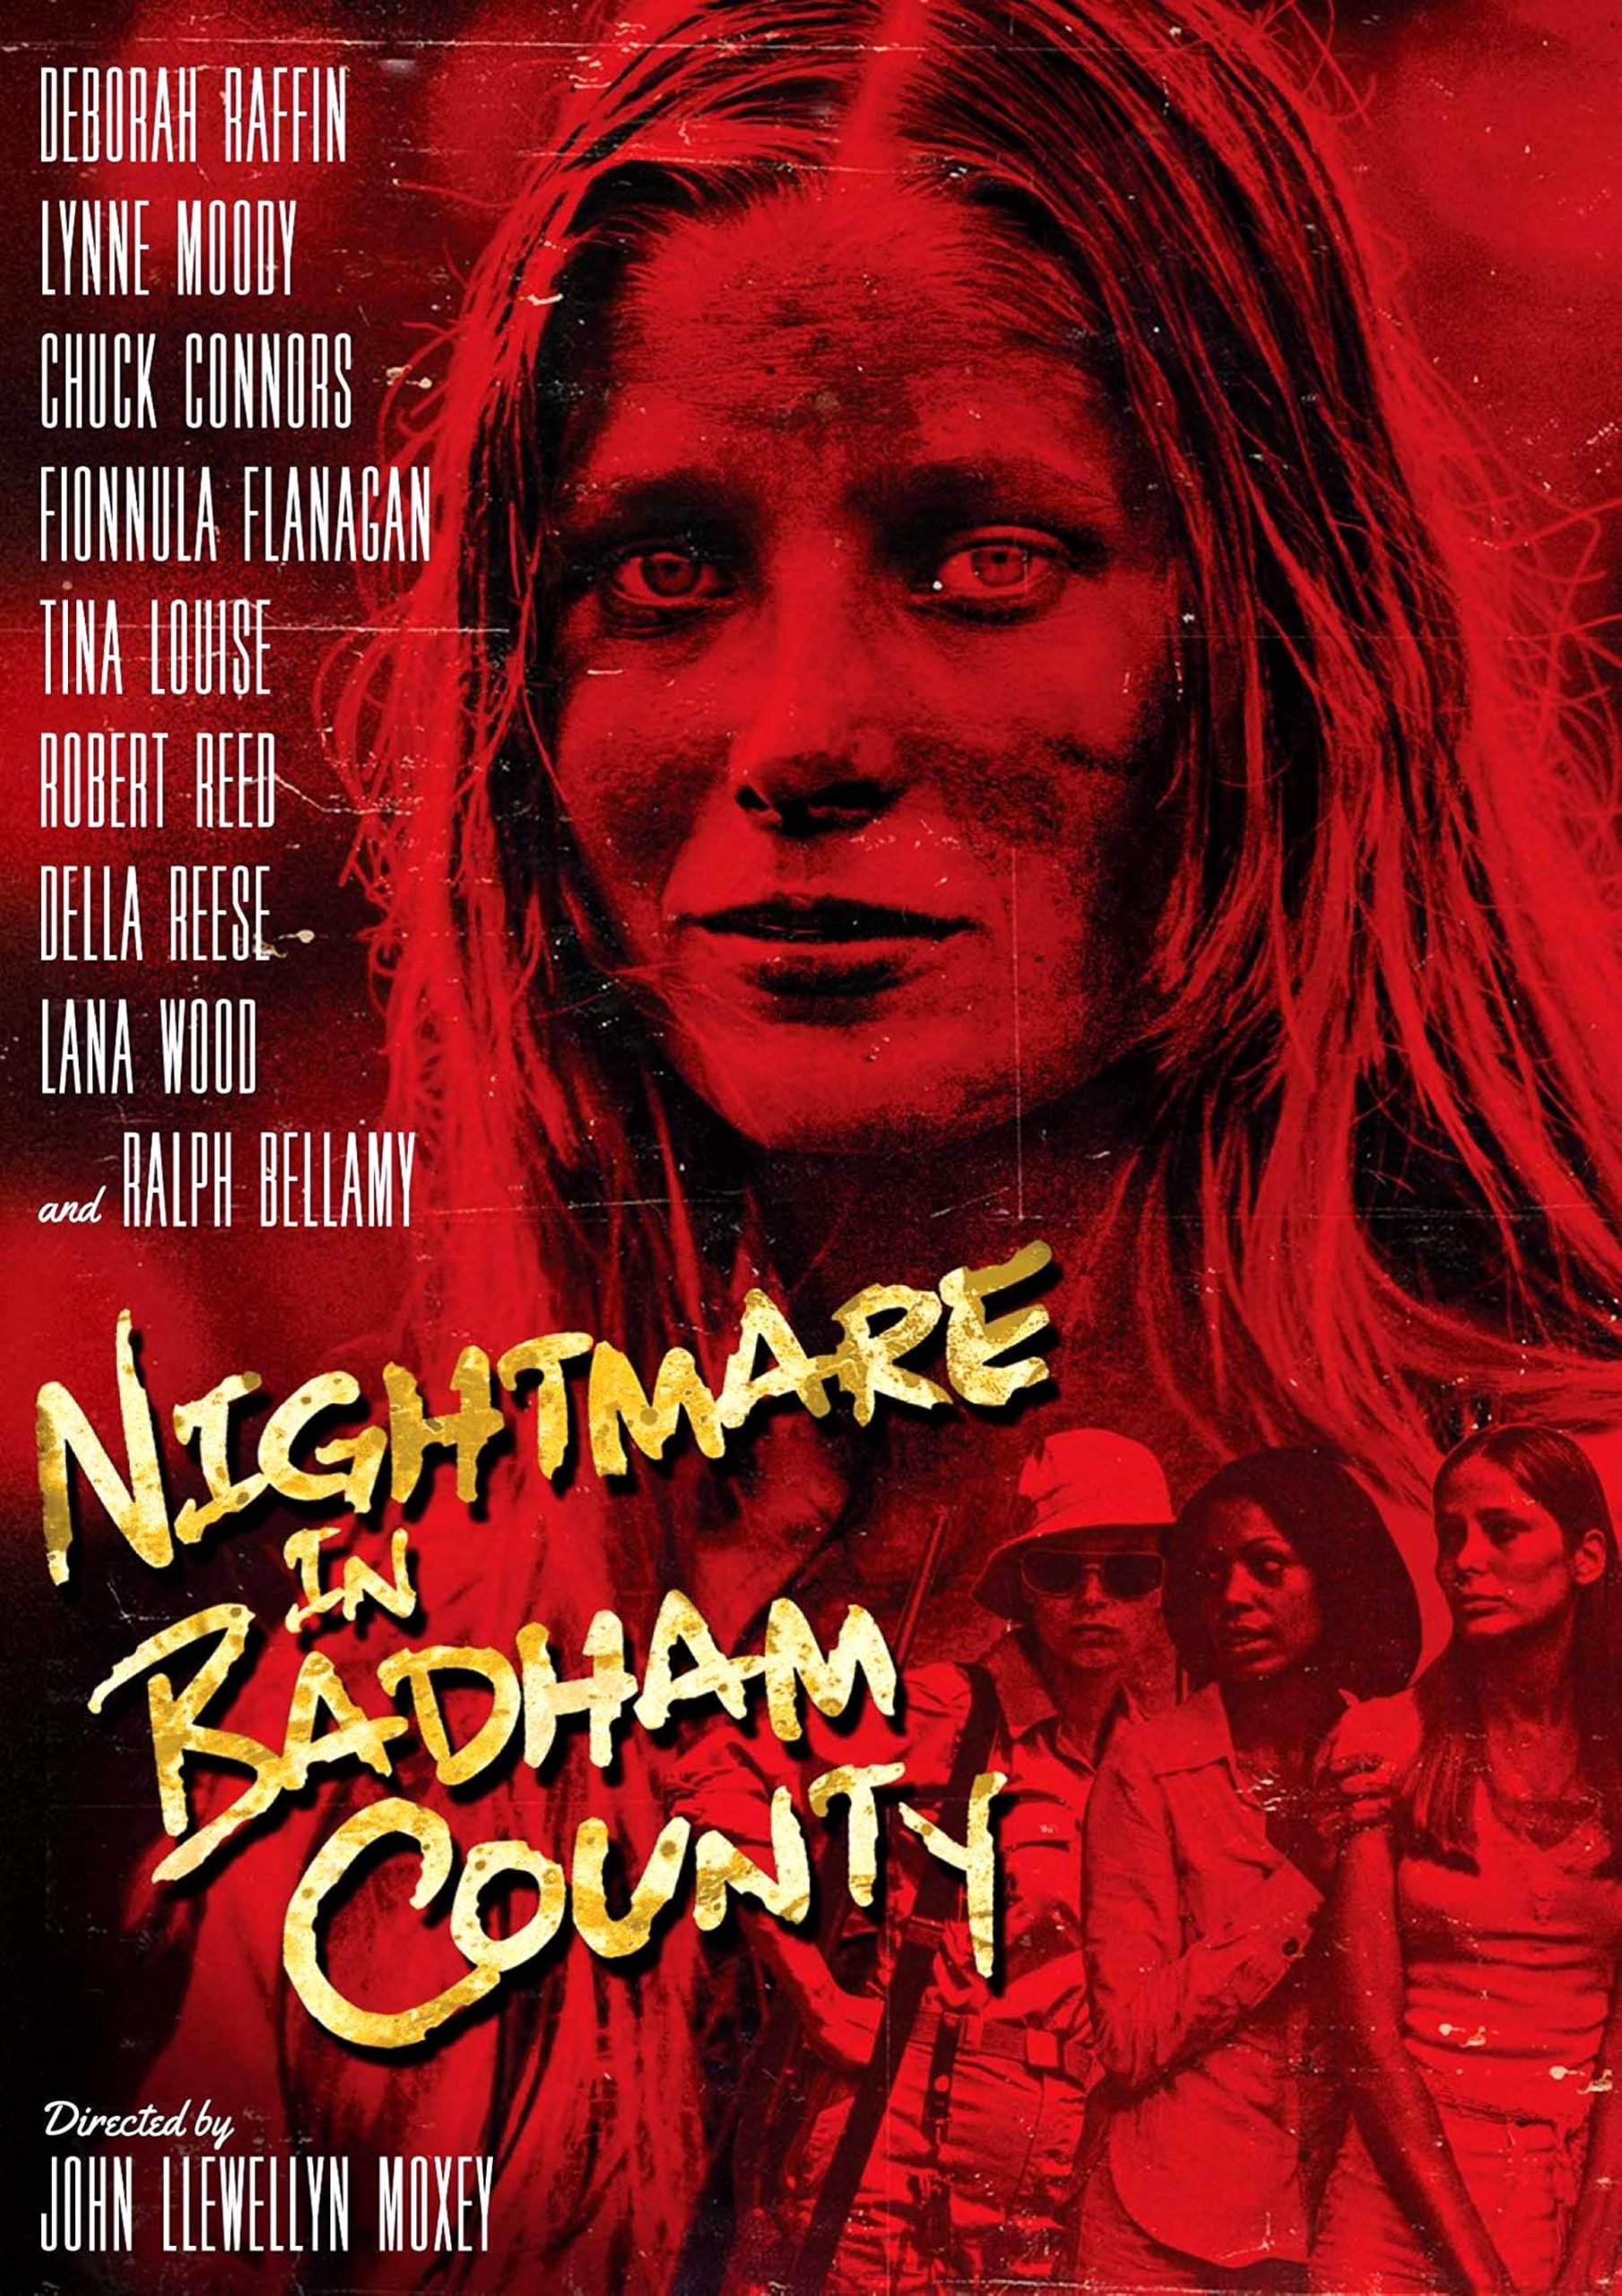 دانلود صوت دوبله فیلم Nightmare in Badham County 1976